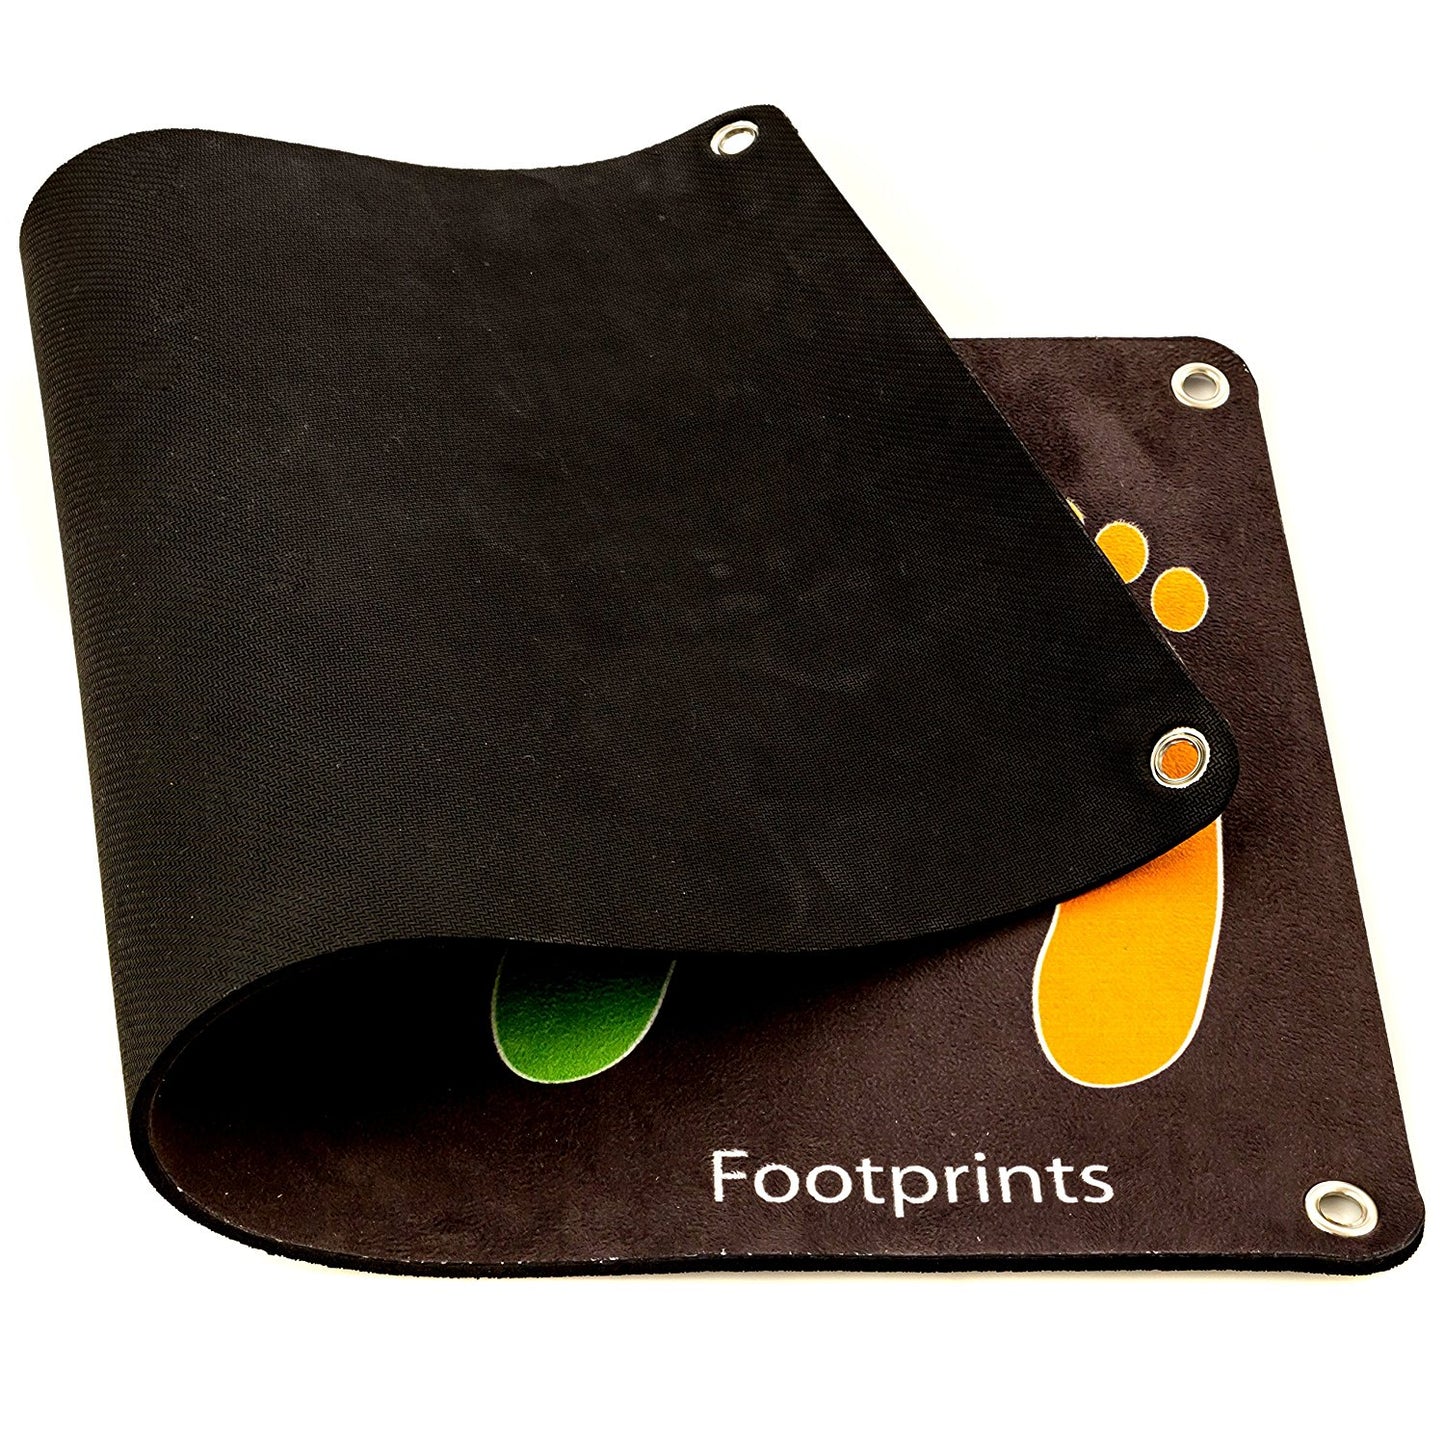 Footprints Golf Stance Trainer